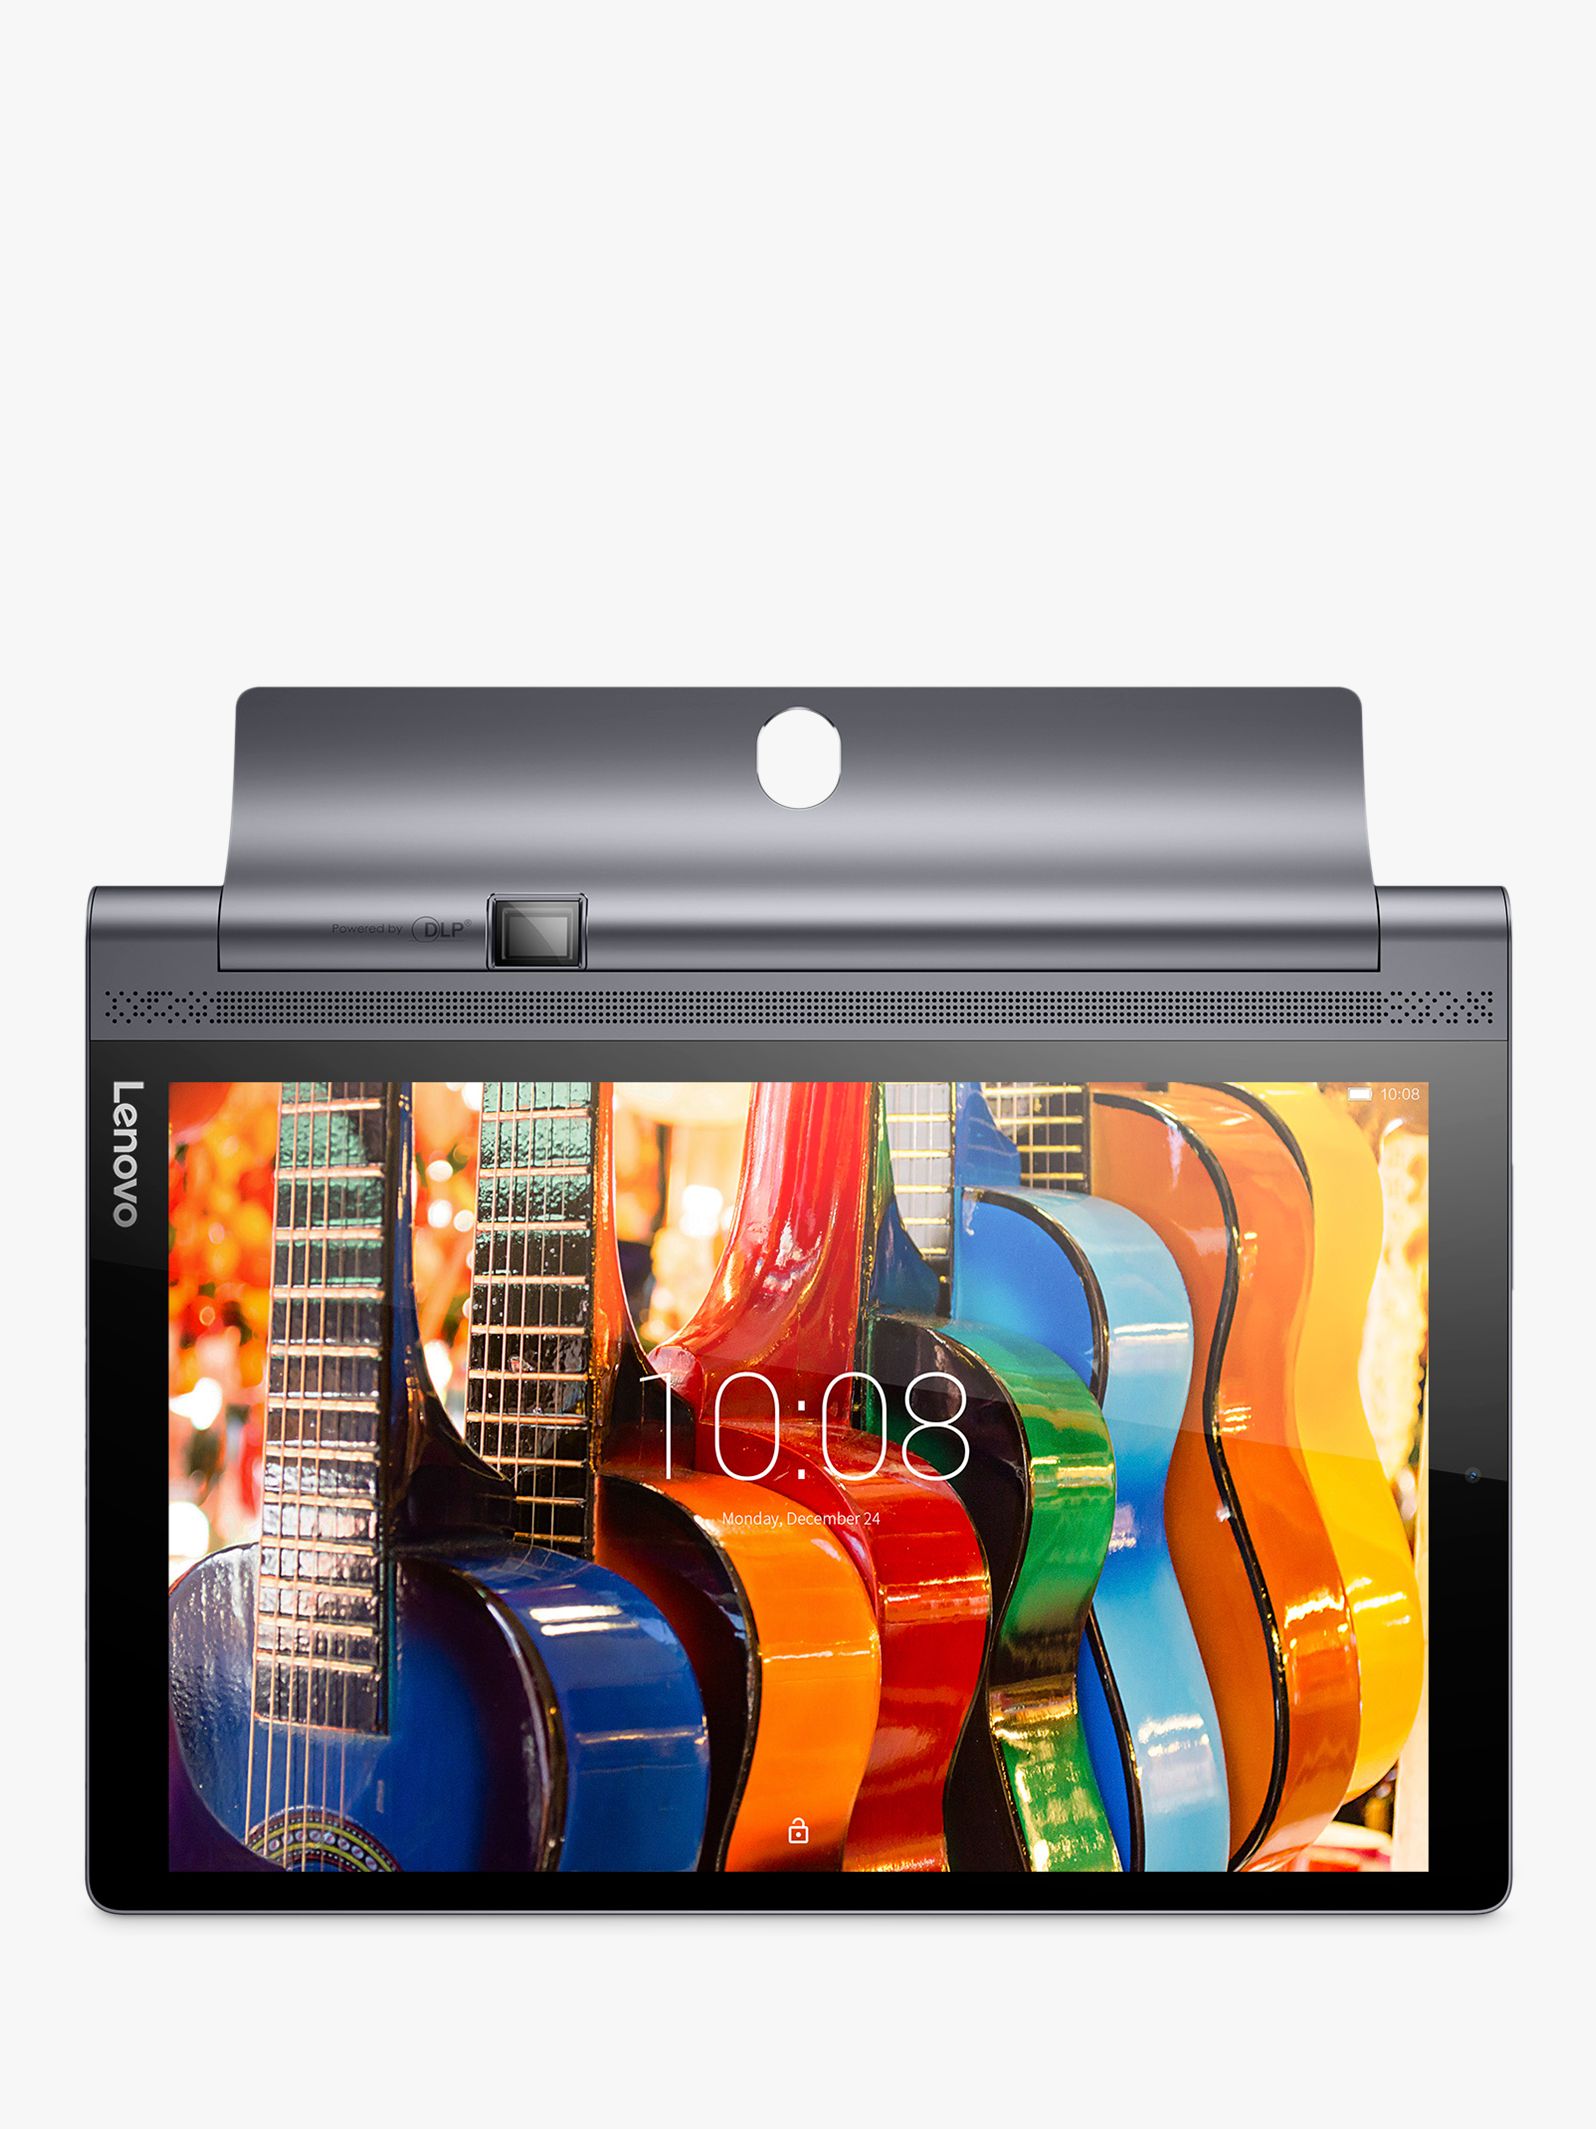 Lenovo Yoga Tab3 Pro Tablet Android Wi Fi 10 Qhd 4gb Ram 64gb Hard Drive Puma Black At John Lewis Partners